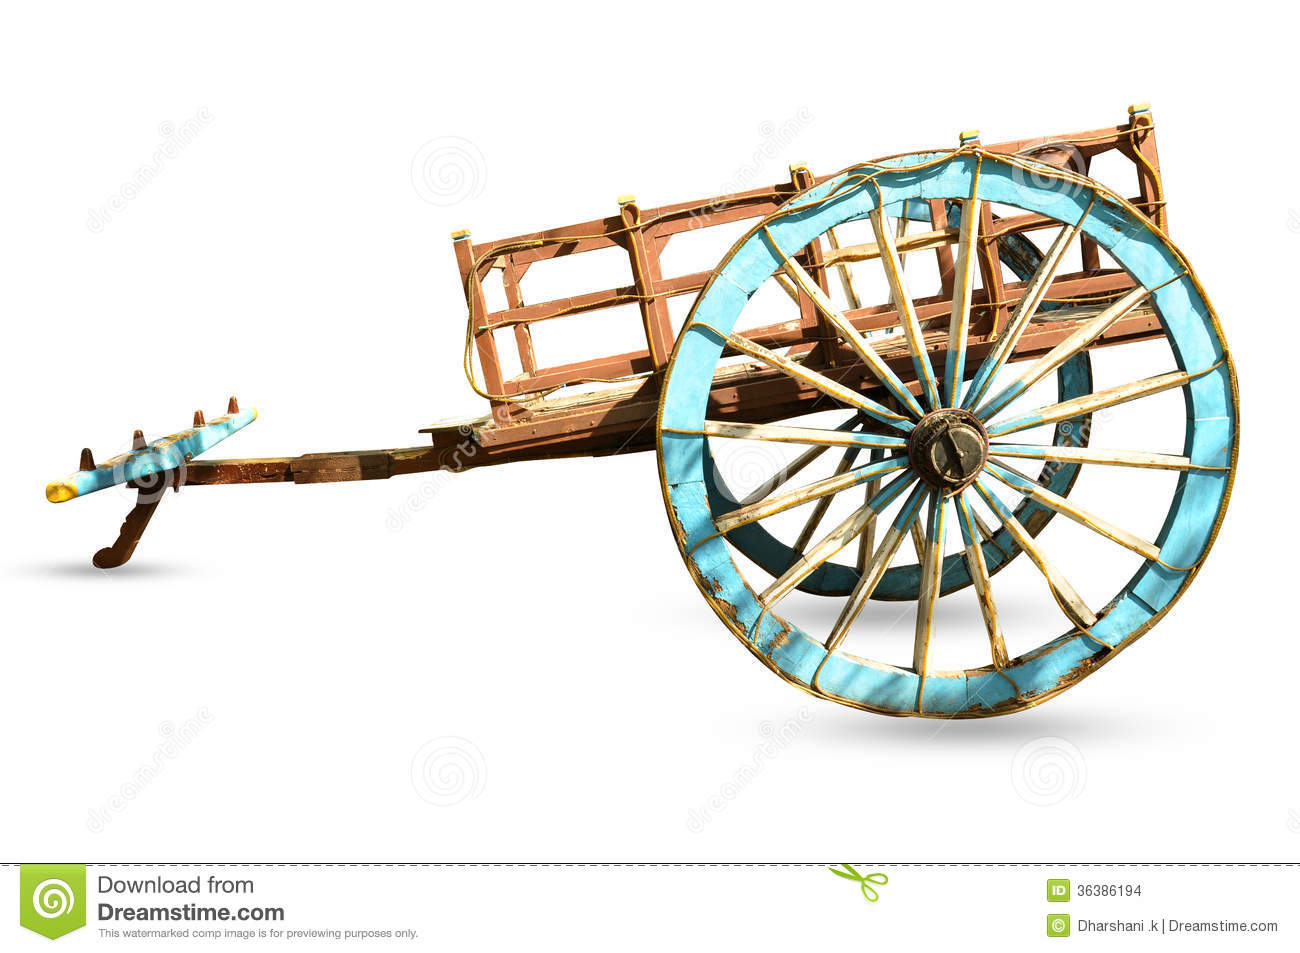 Indian bullock cart clipart.